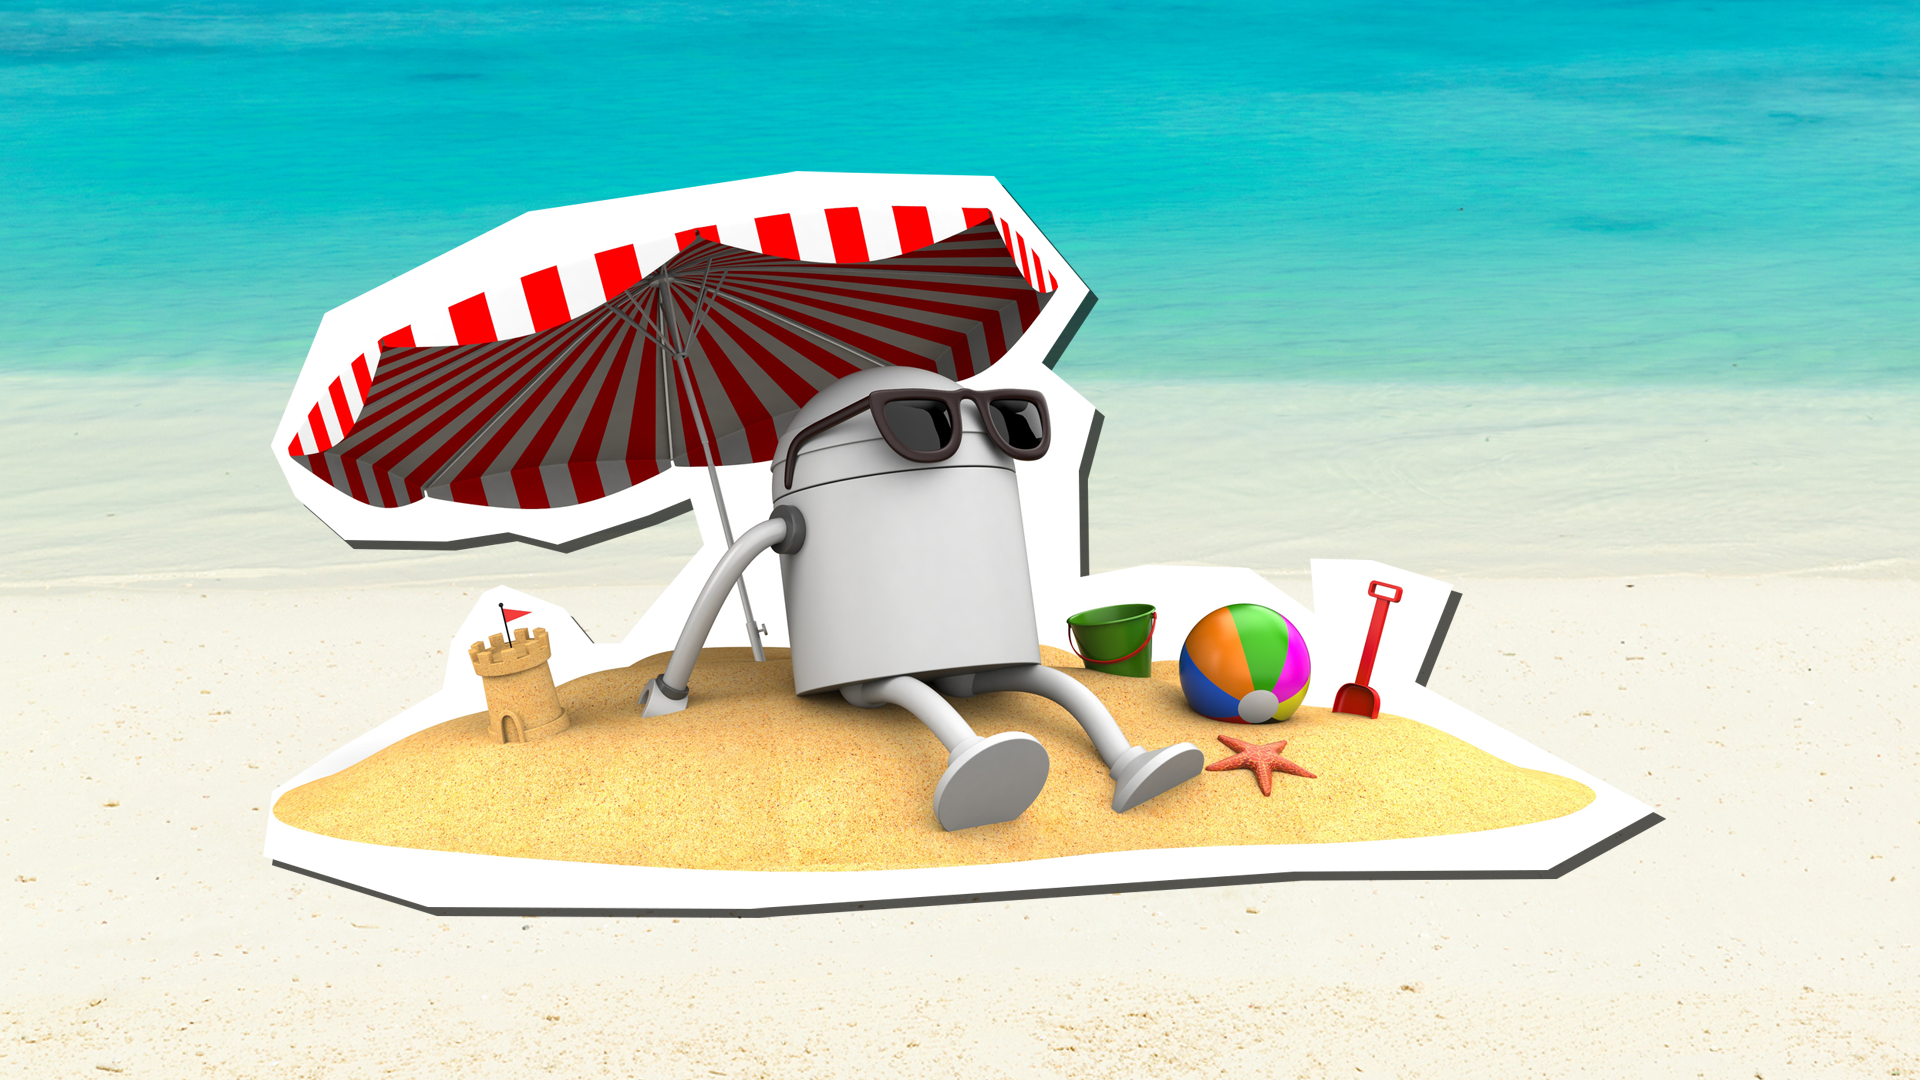 Robot on the beach